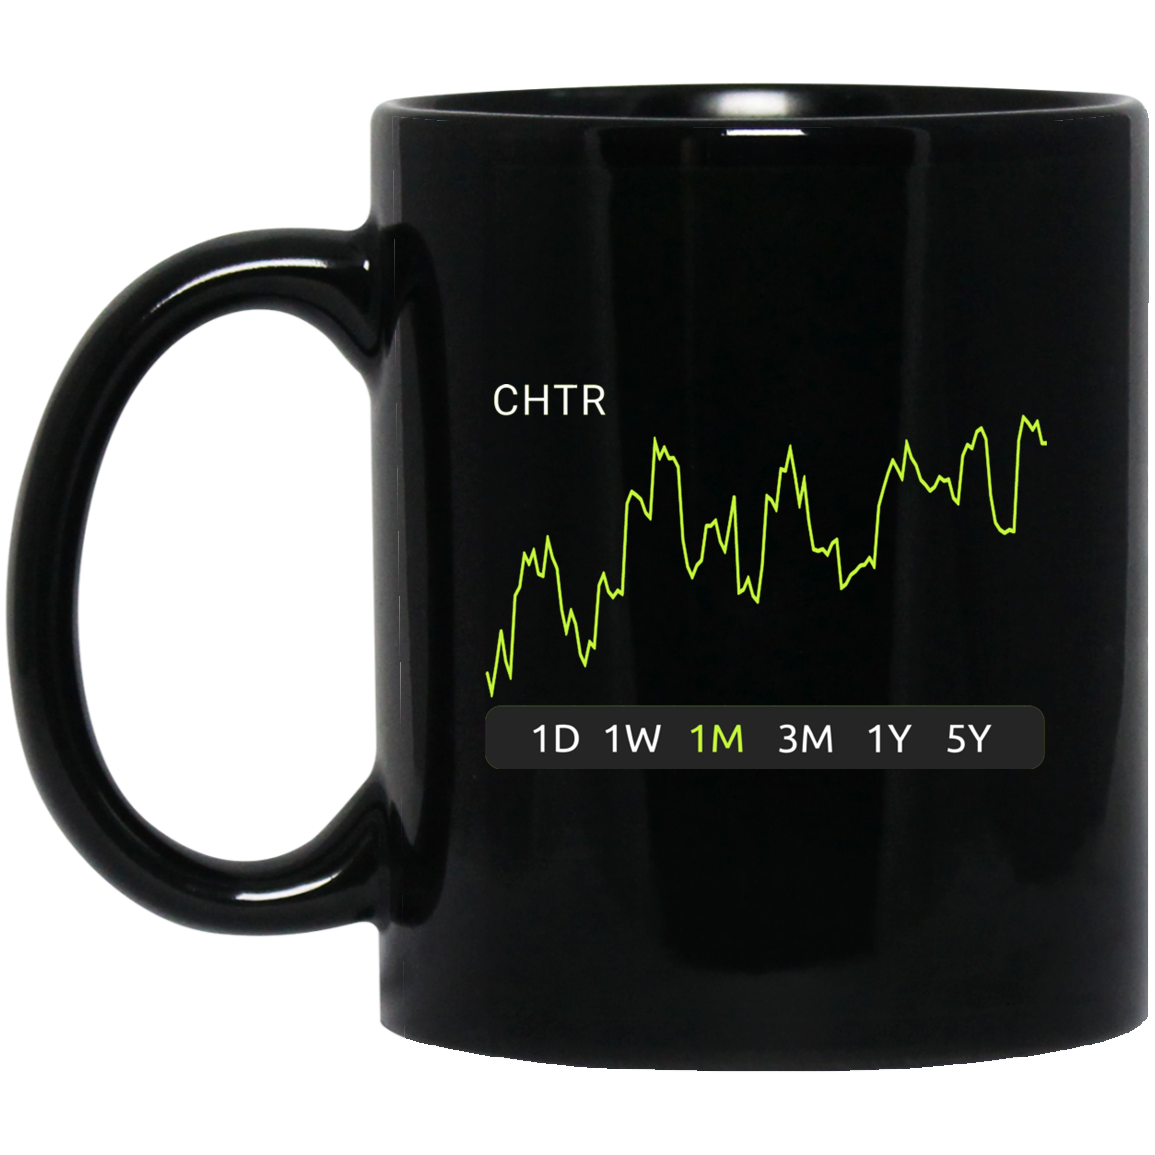 CHTR Stock 1m Mug